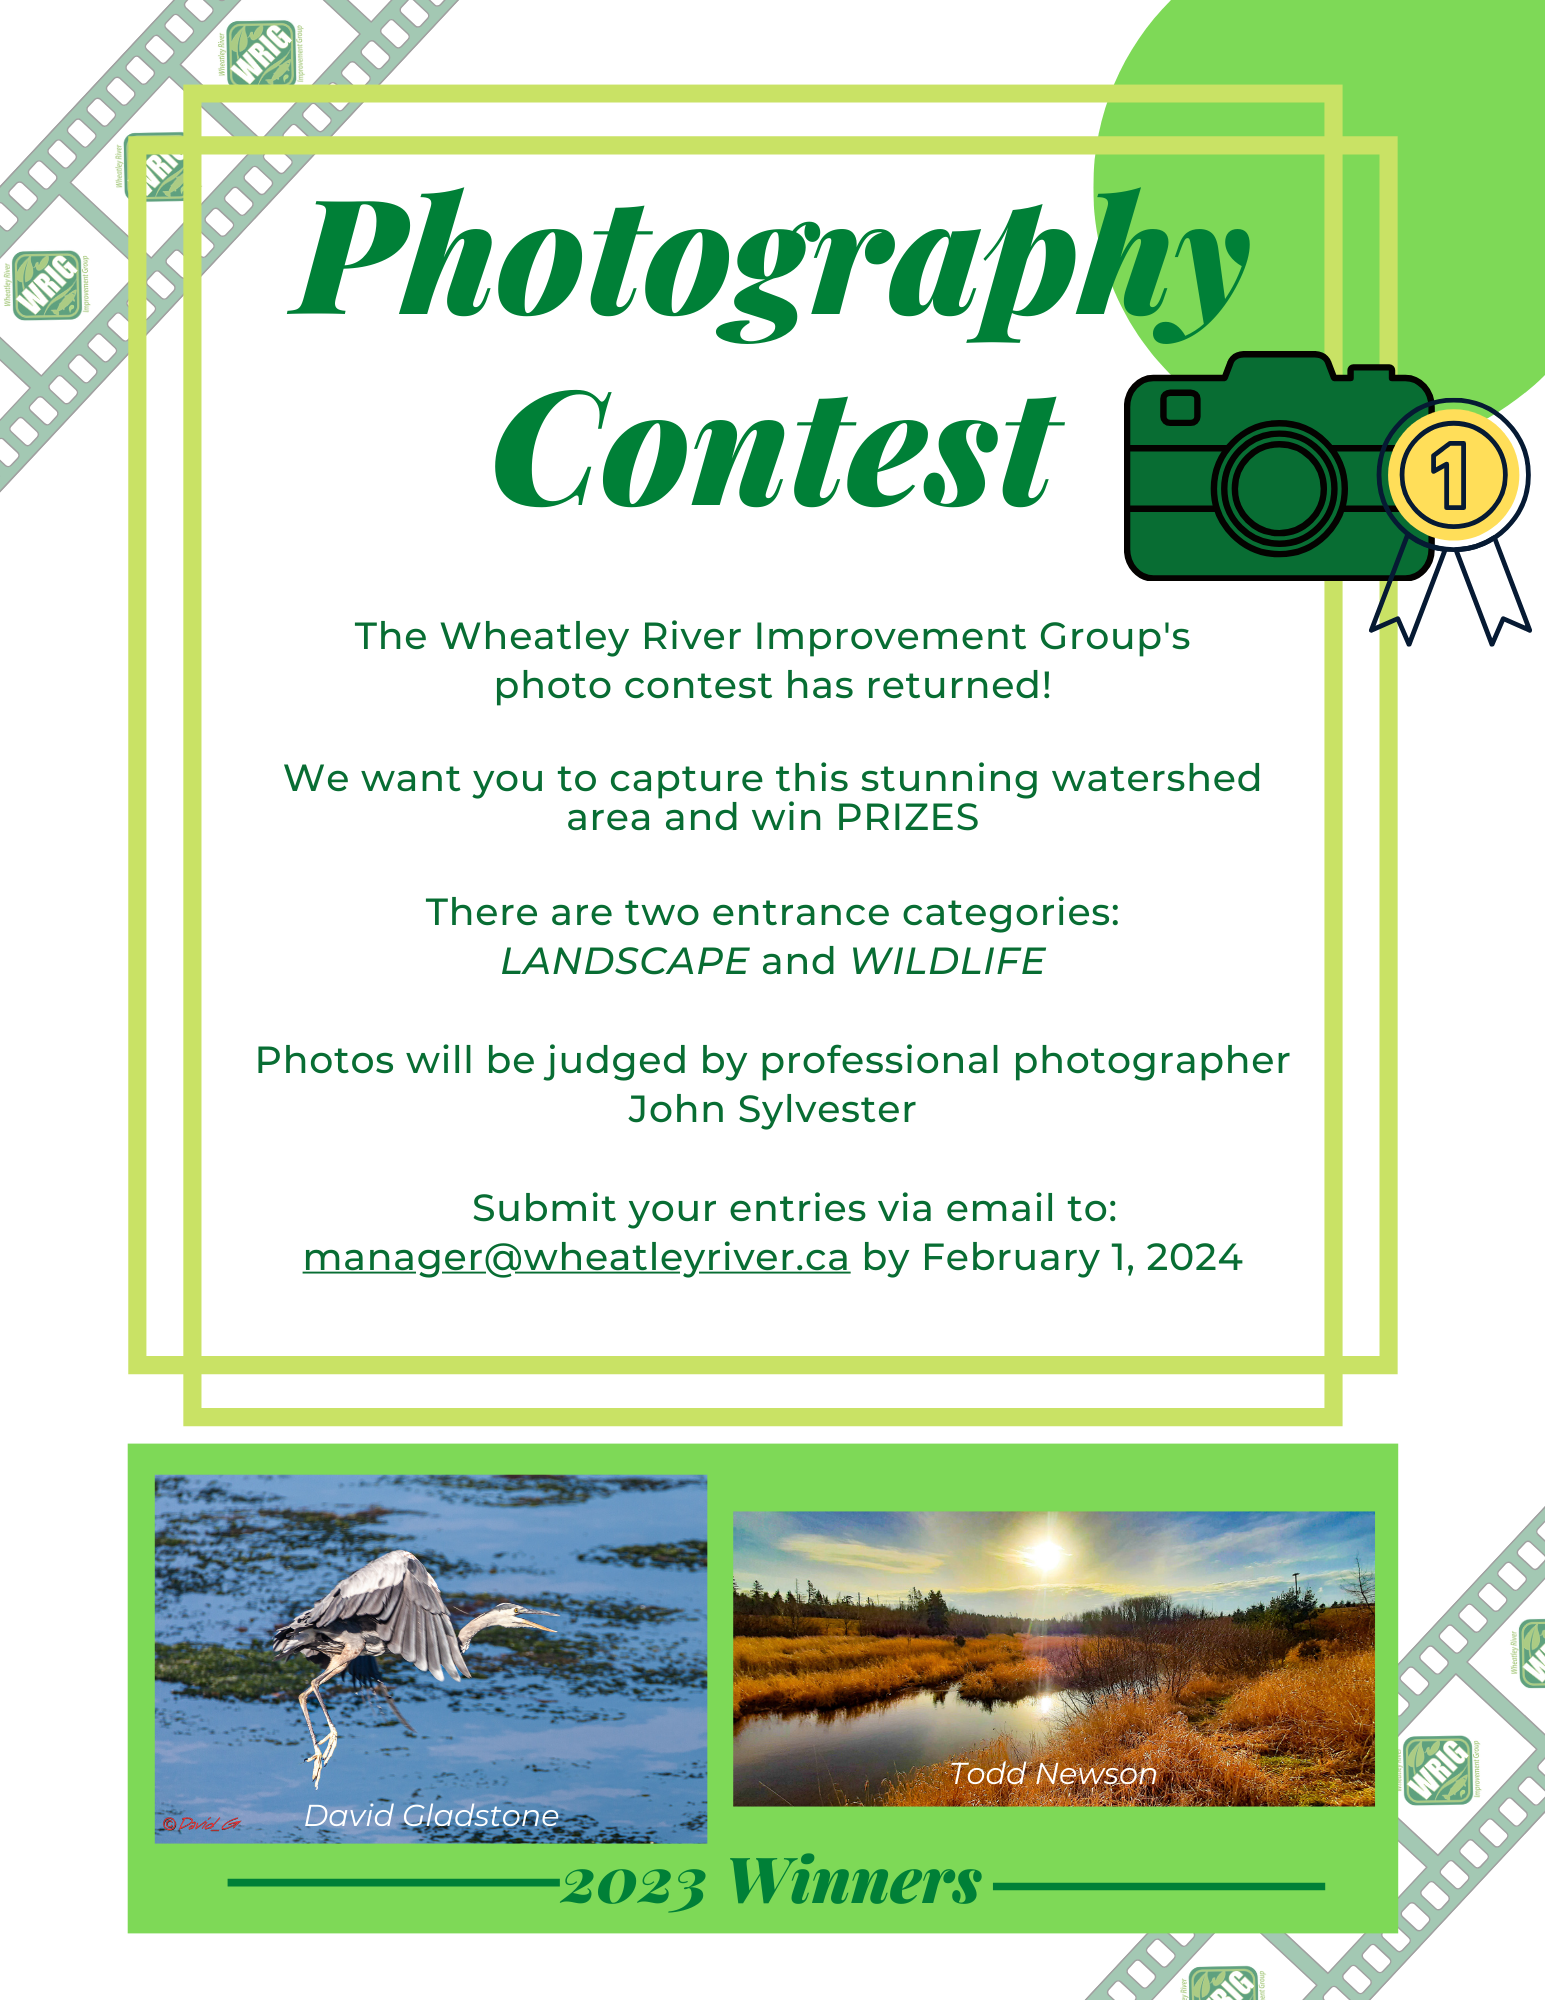 Photo Contest entries DUE!